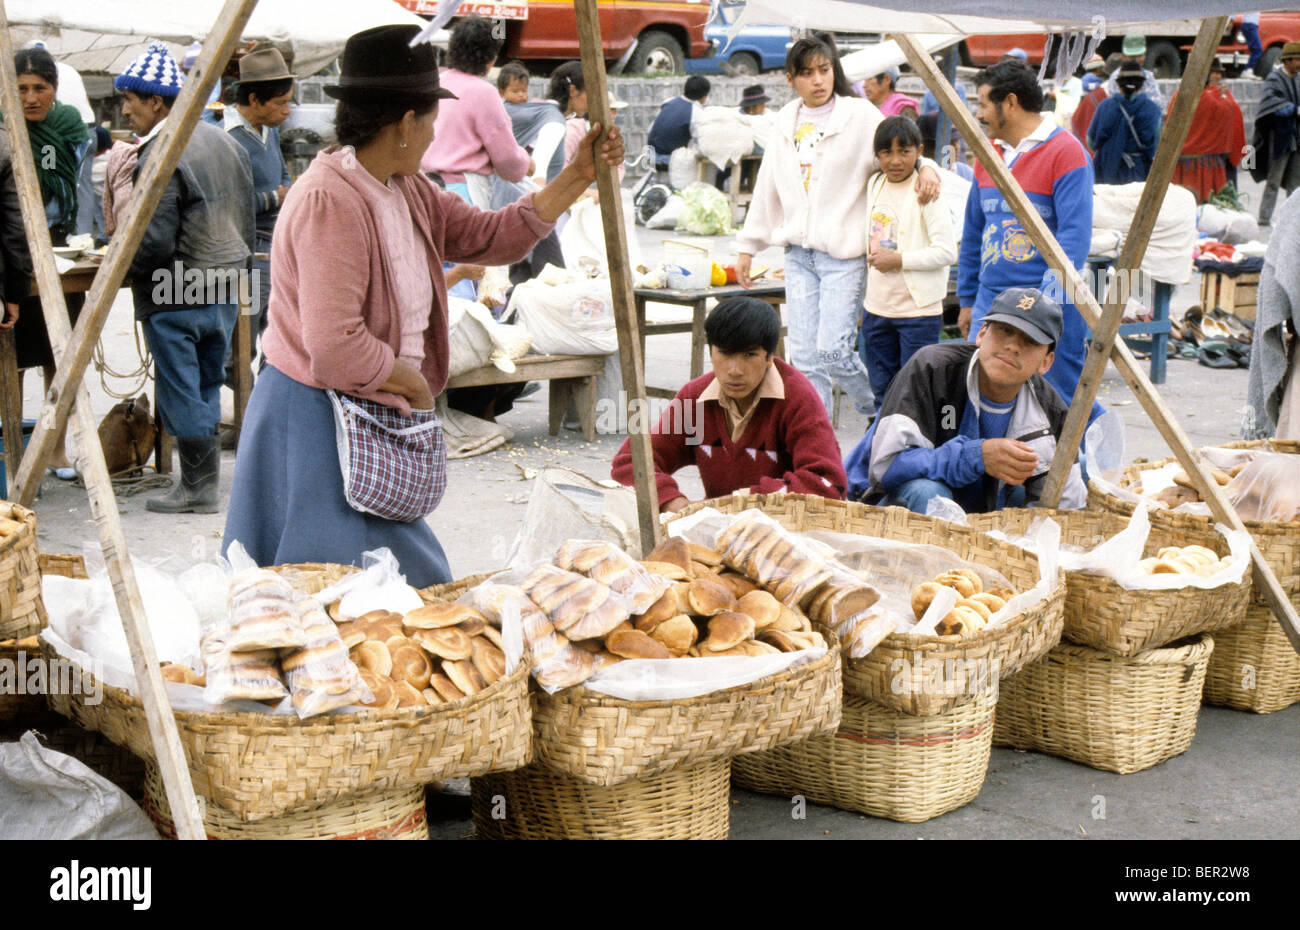 Bread sellers  in local upland Ecuador market. Stock Photo